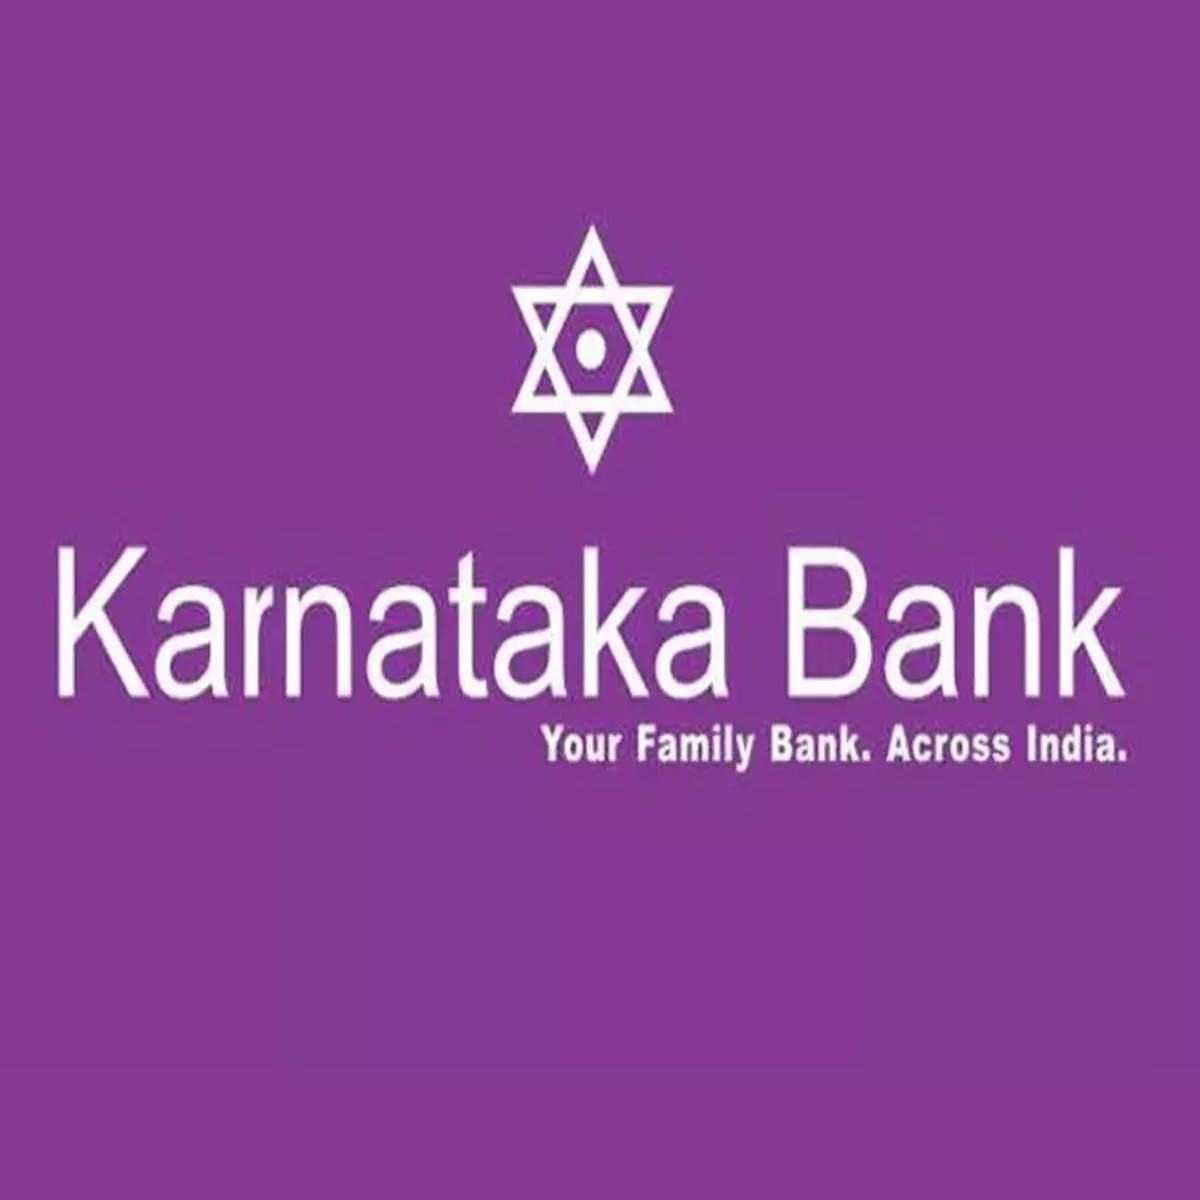 Karnataka Bank Jumps 4% on Rs. 800-Crore Fundraise